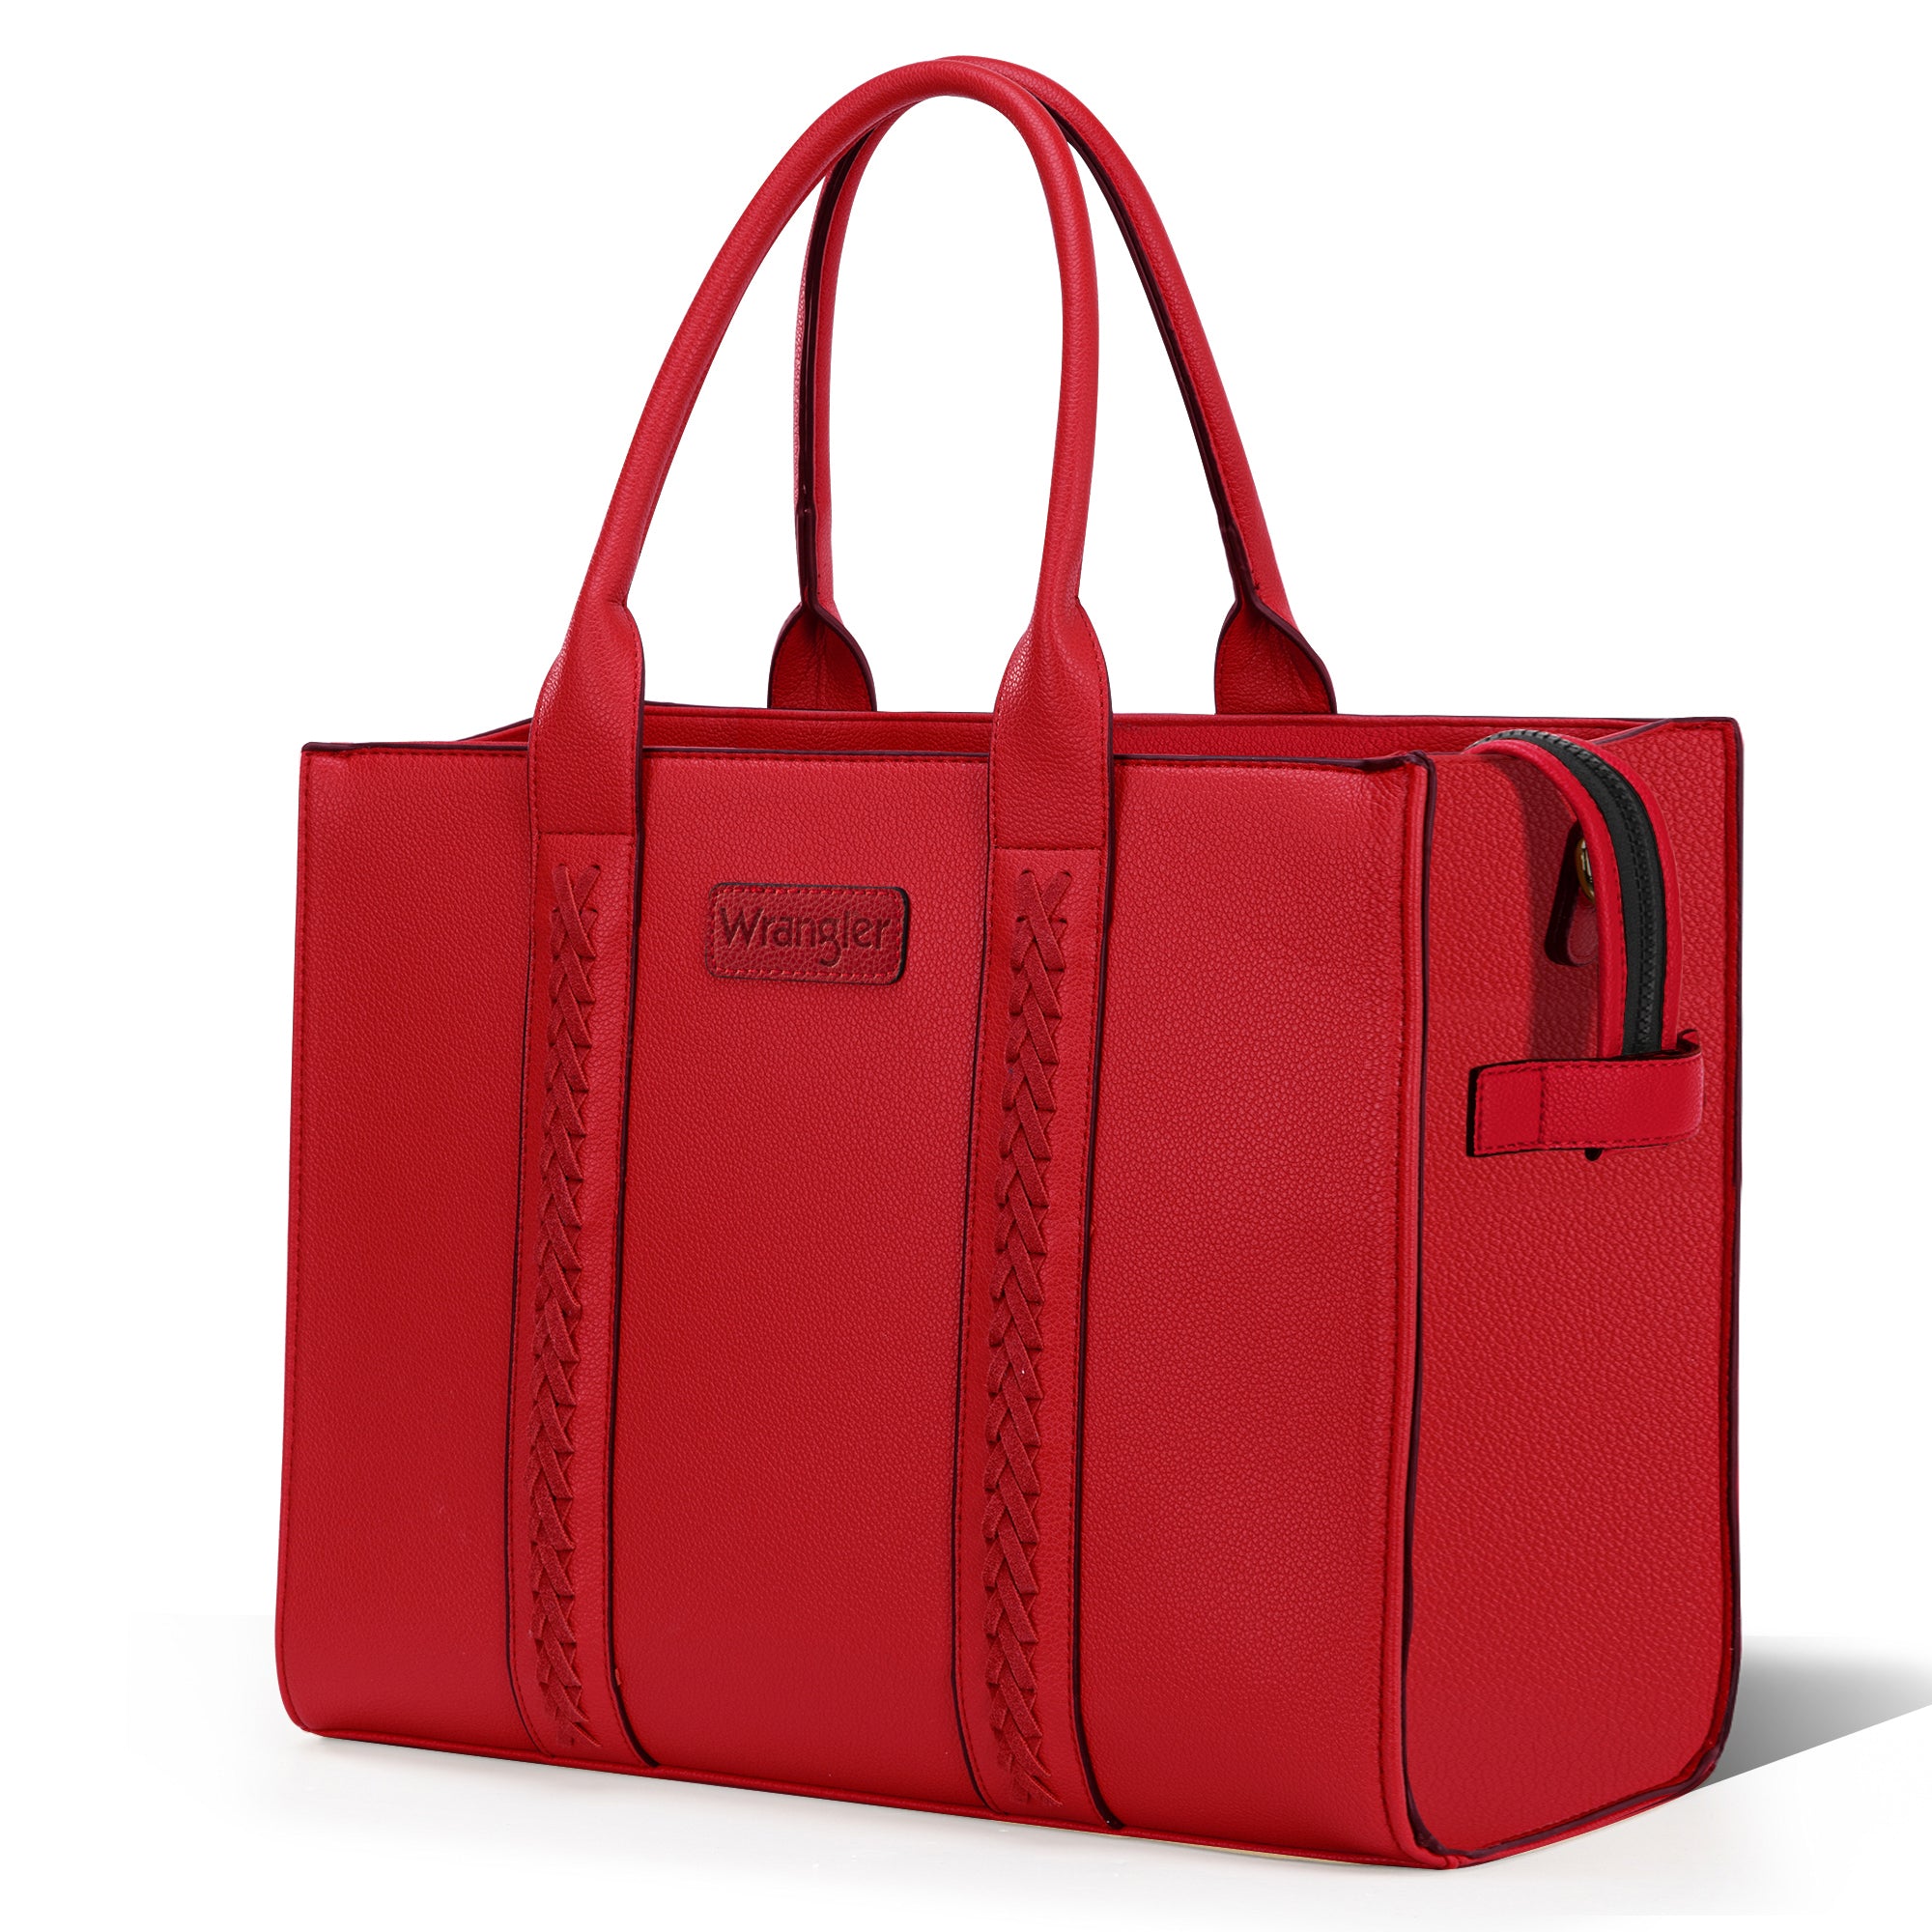 Calvin Klein Beige Polyester Women's Handbag: Handbags